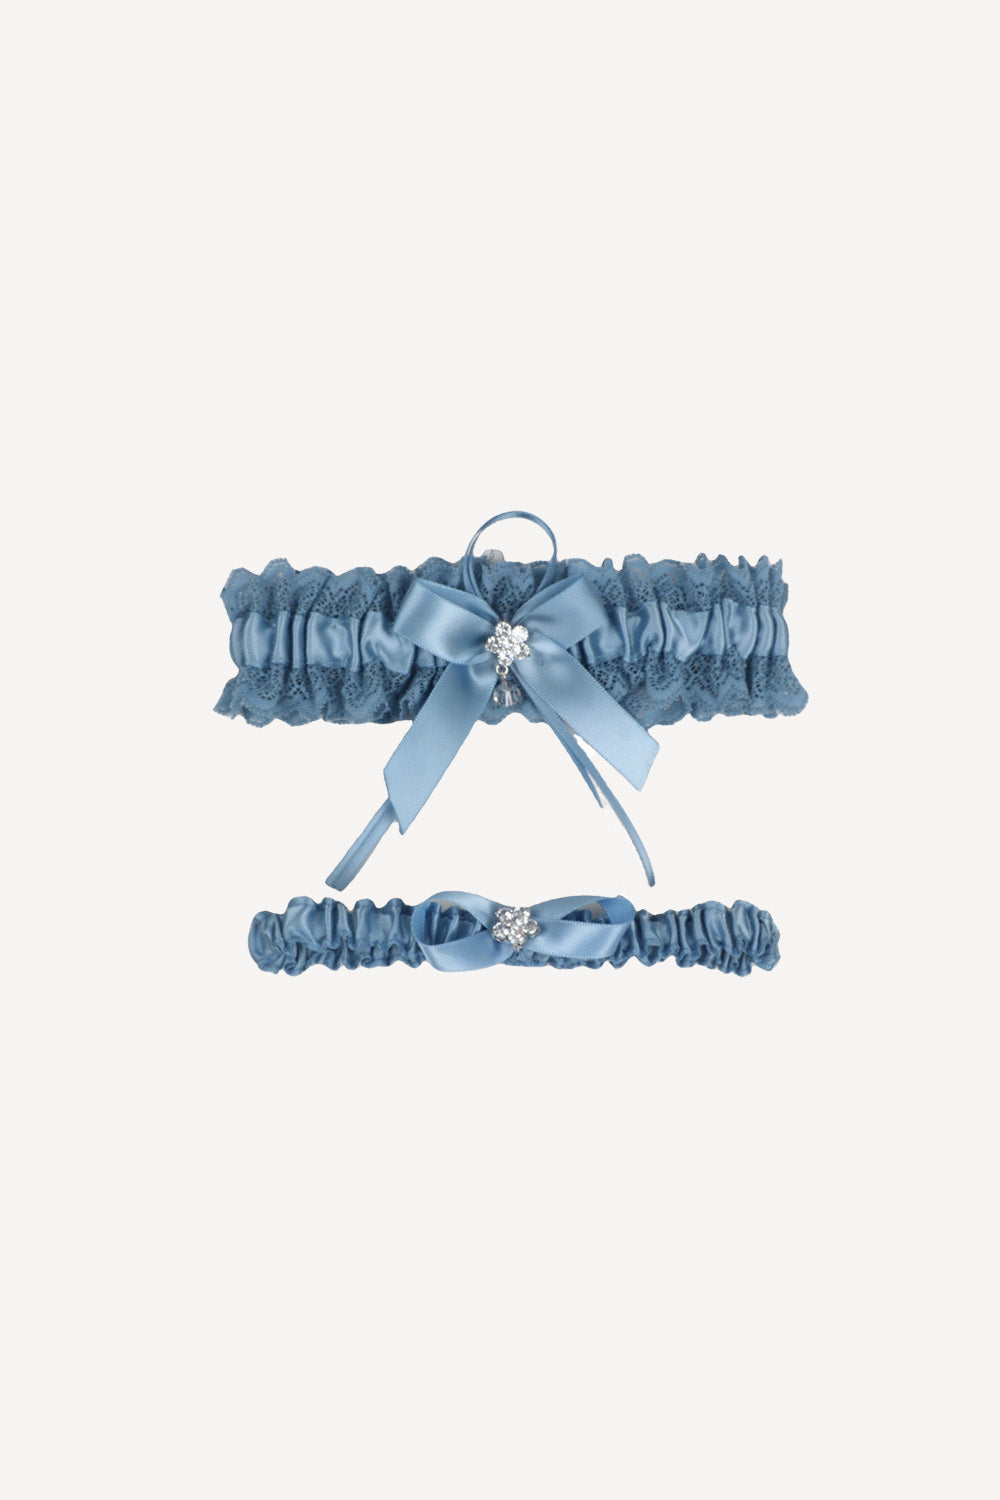 Blue lace garters